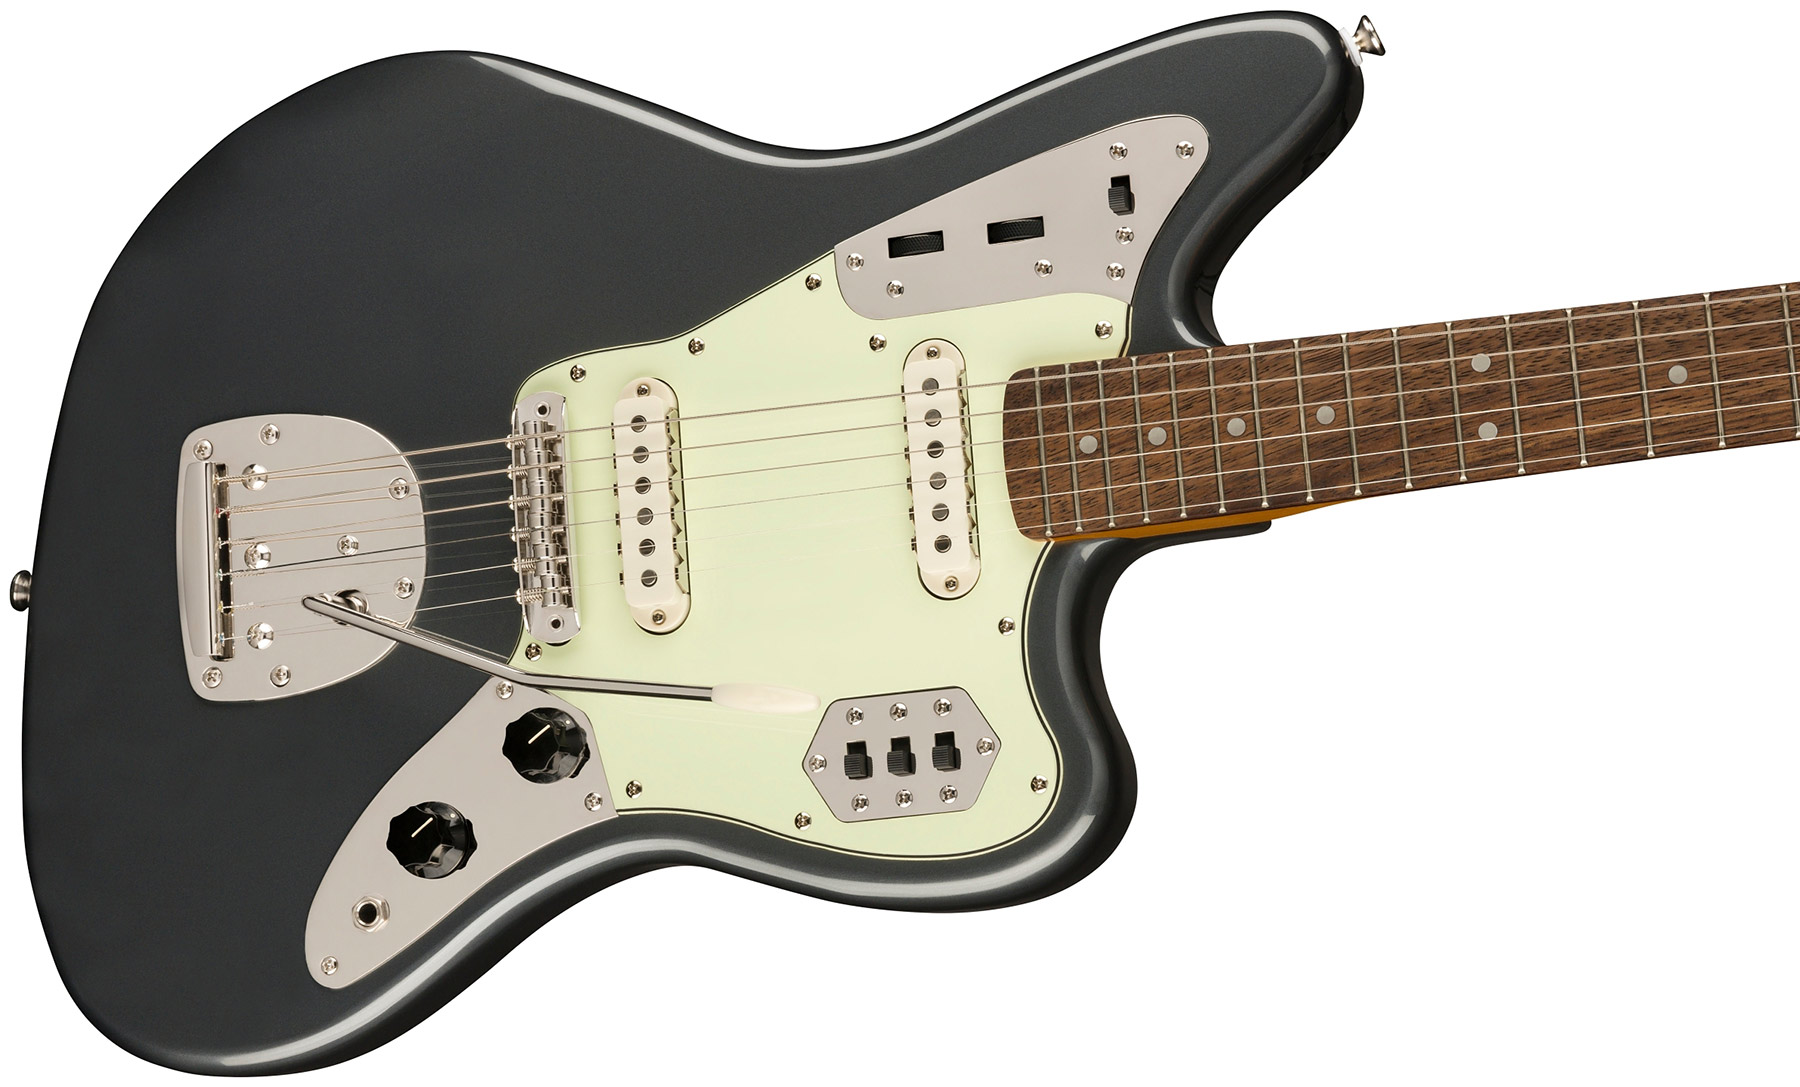 Squier Jaguar 60s Classic Vibe Fsr Ltd 2s Trem Lau - Charcoal Frost Metallic - Retro rock electric guitar - Variation 2